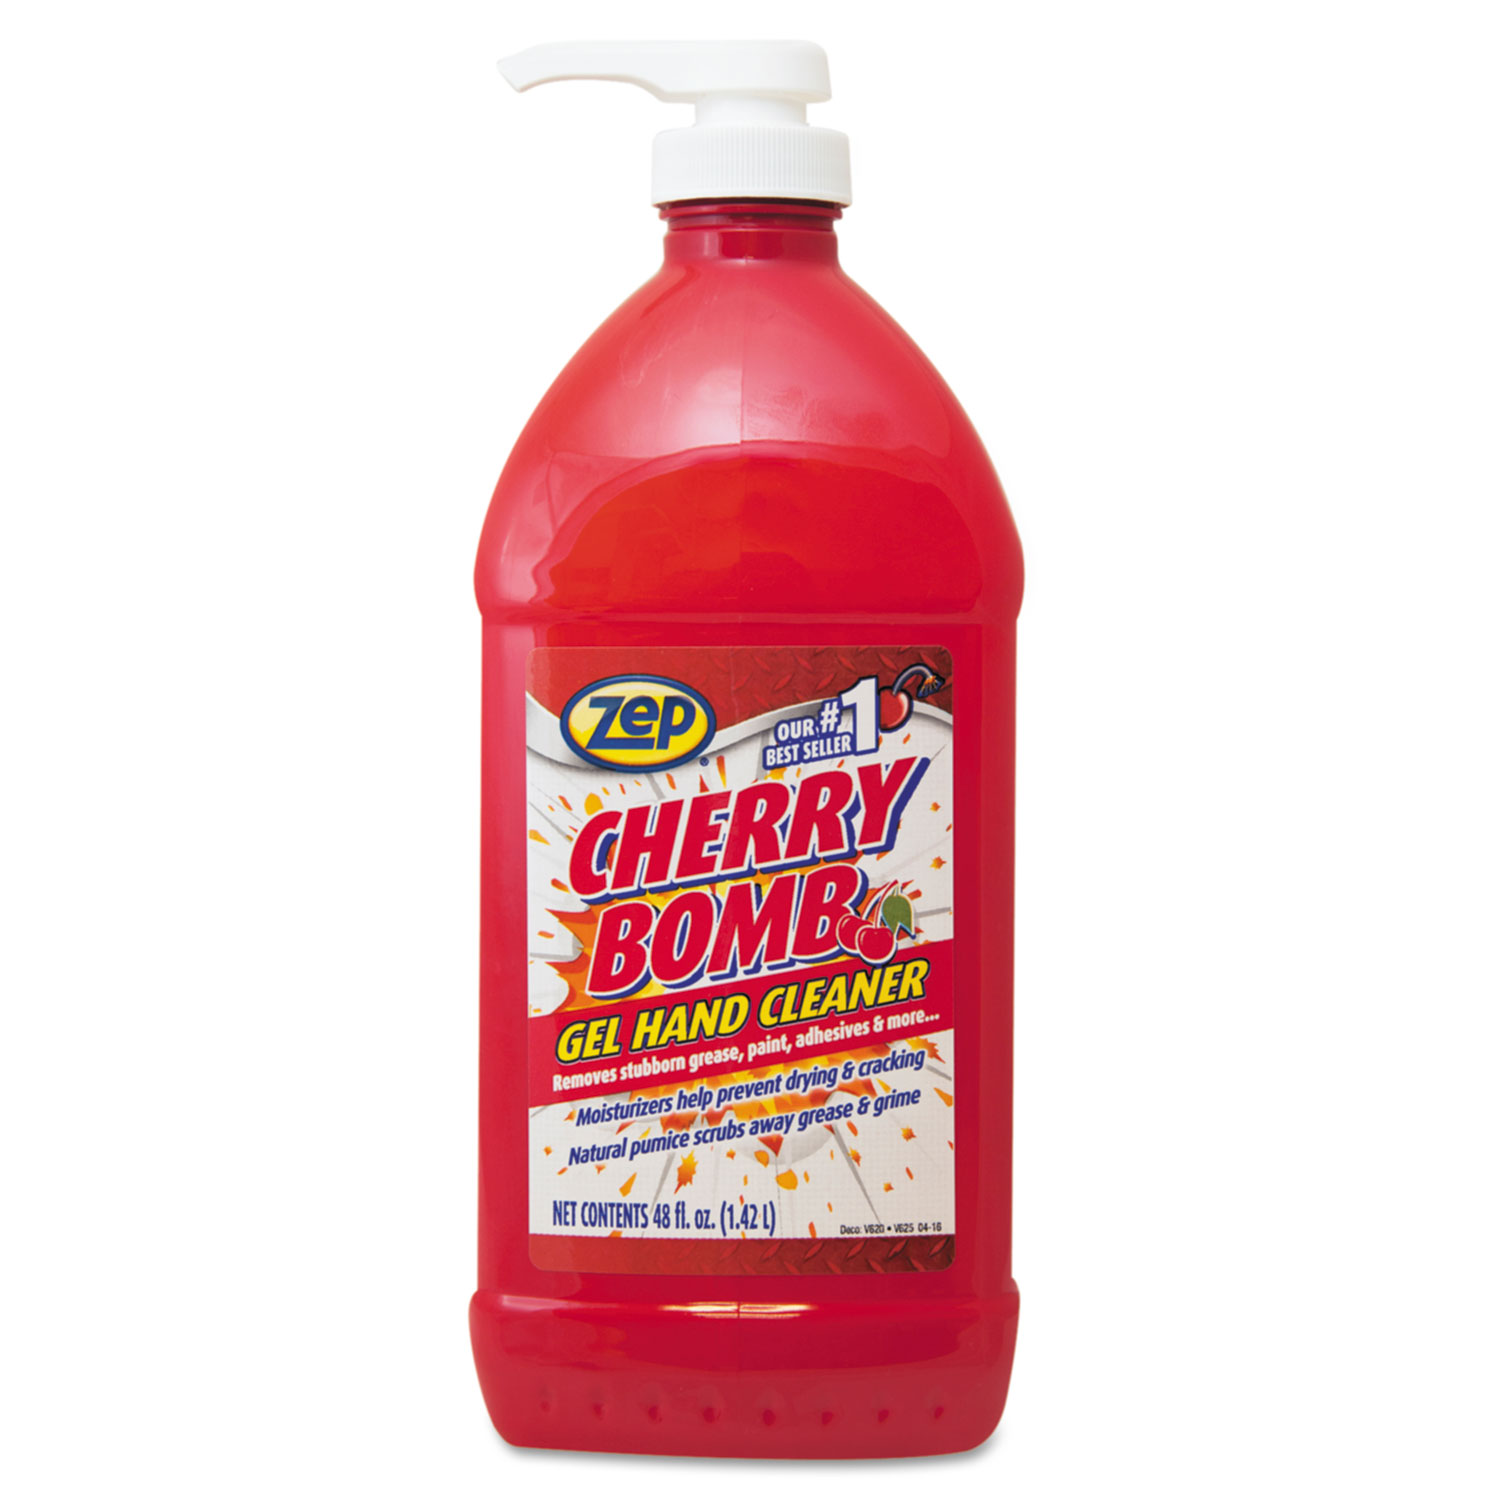 CHERRY BOMB Gel Hand Cleaner, Cherry, 48 oz Pump Bottle